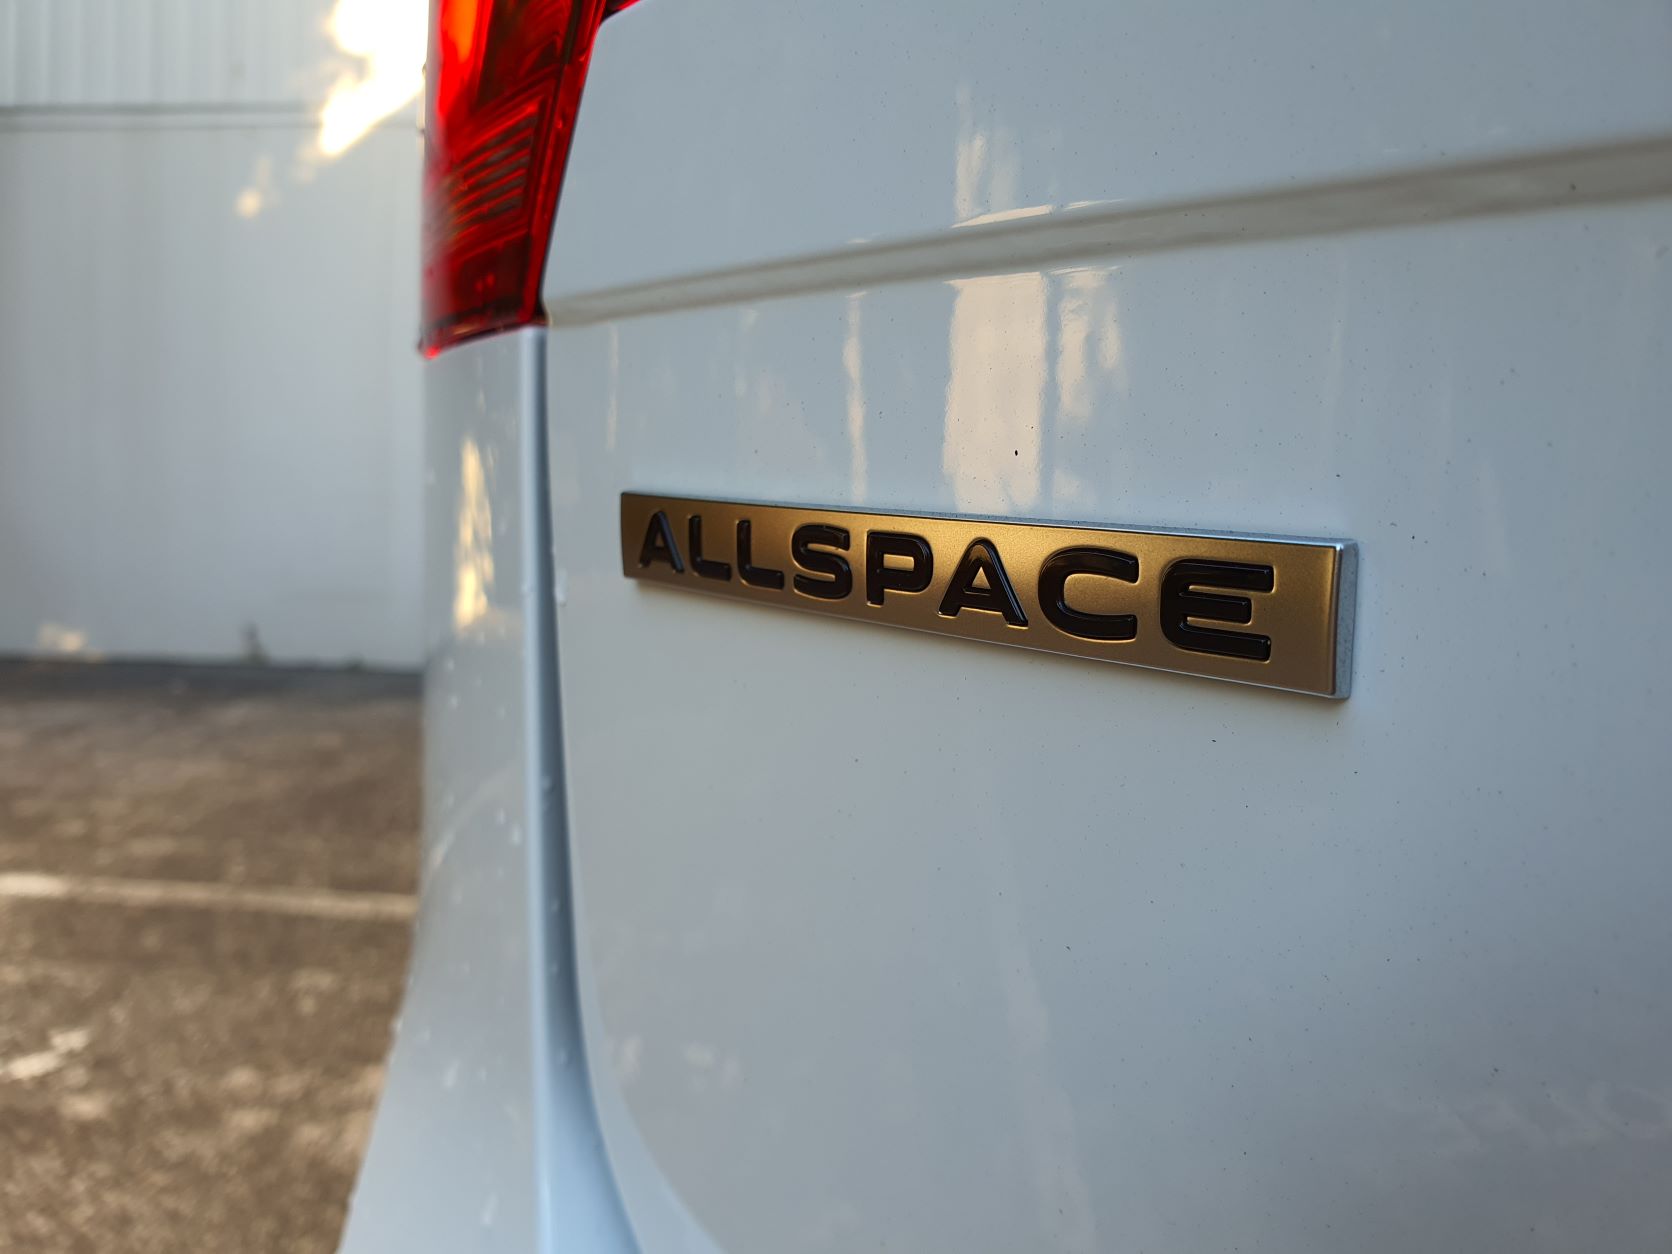 Allspace badging on the 2022 Volkswagen Tiguan Allspace R-Line